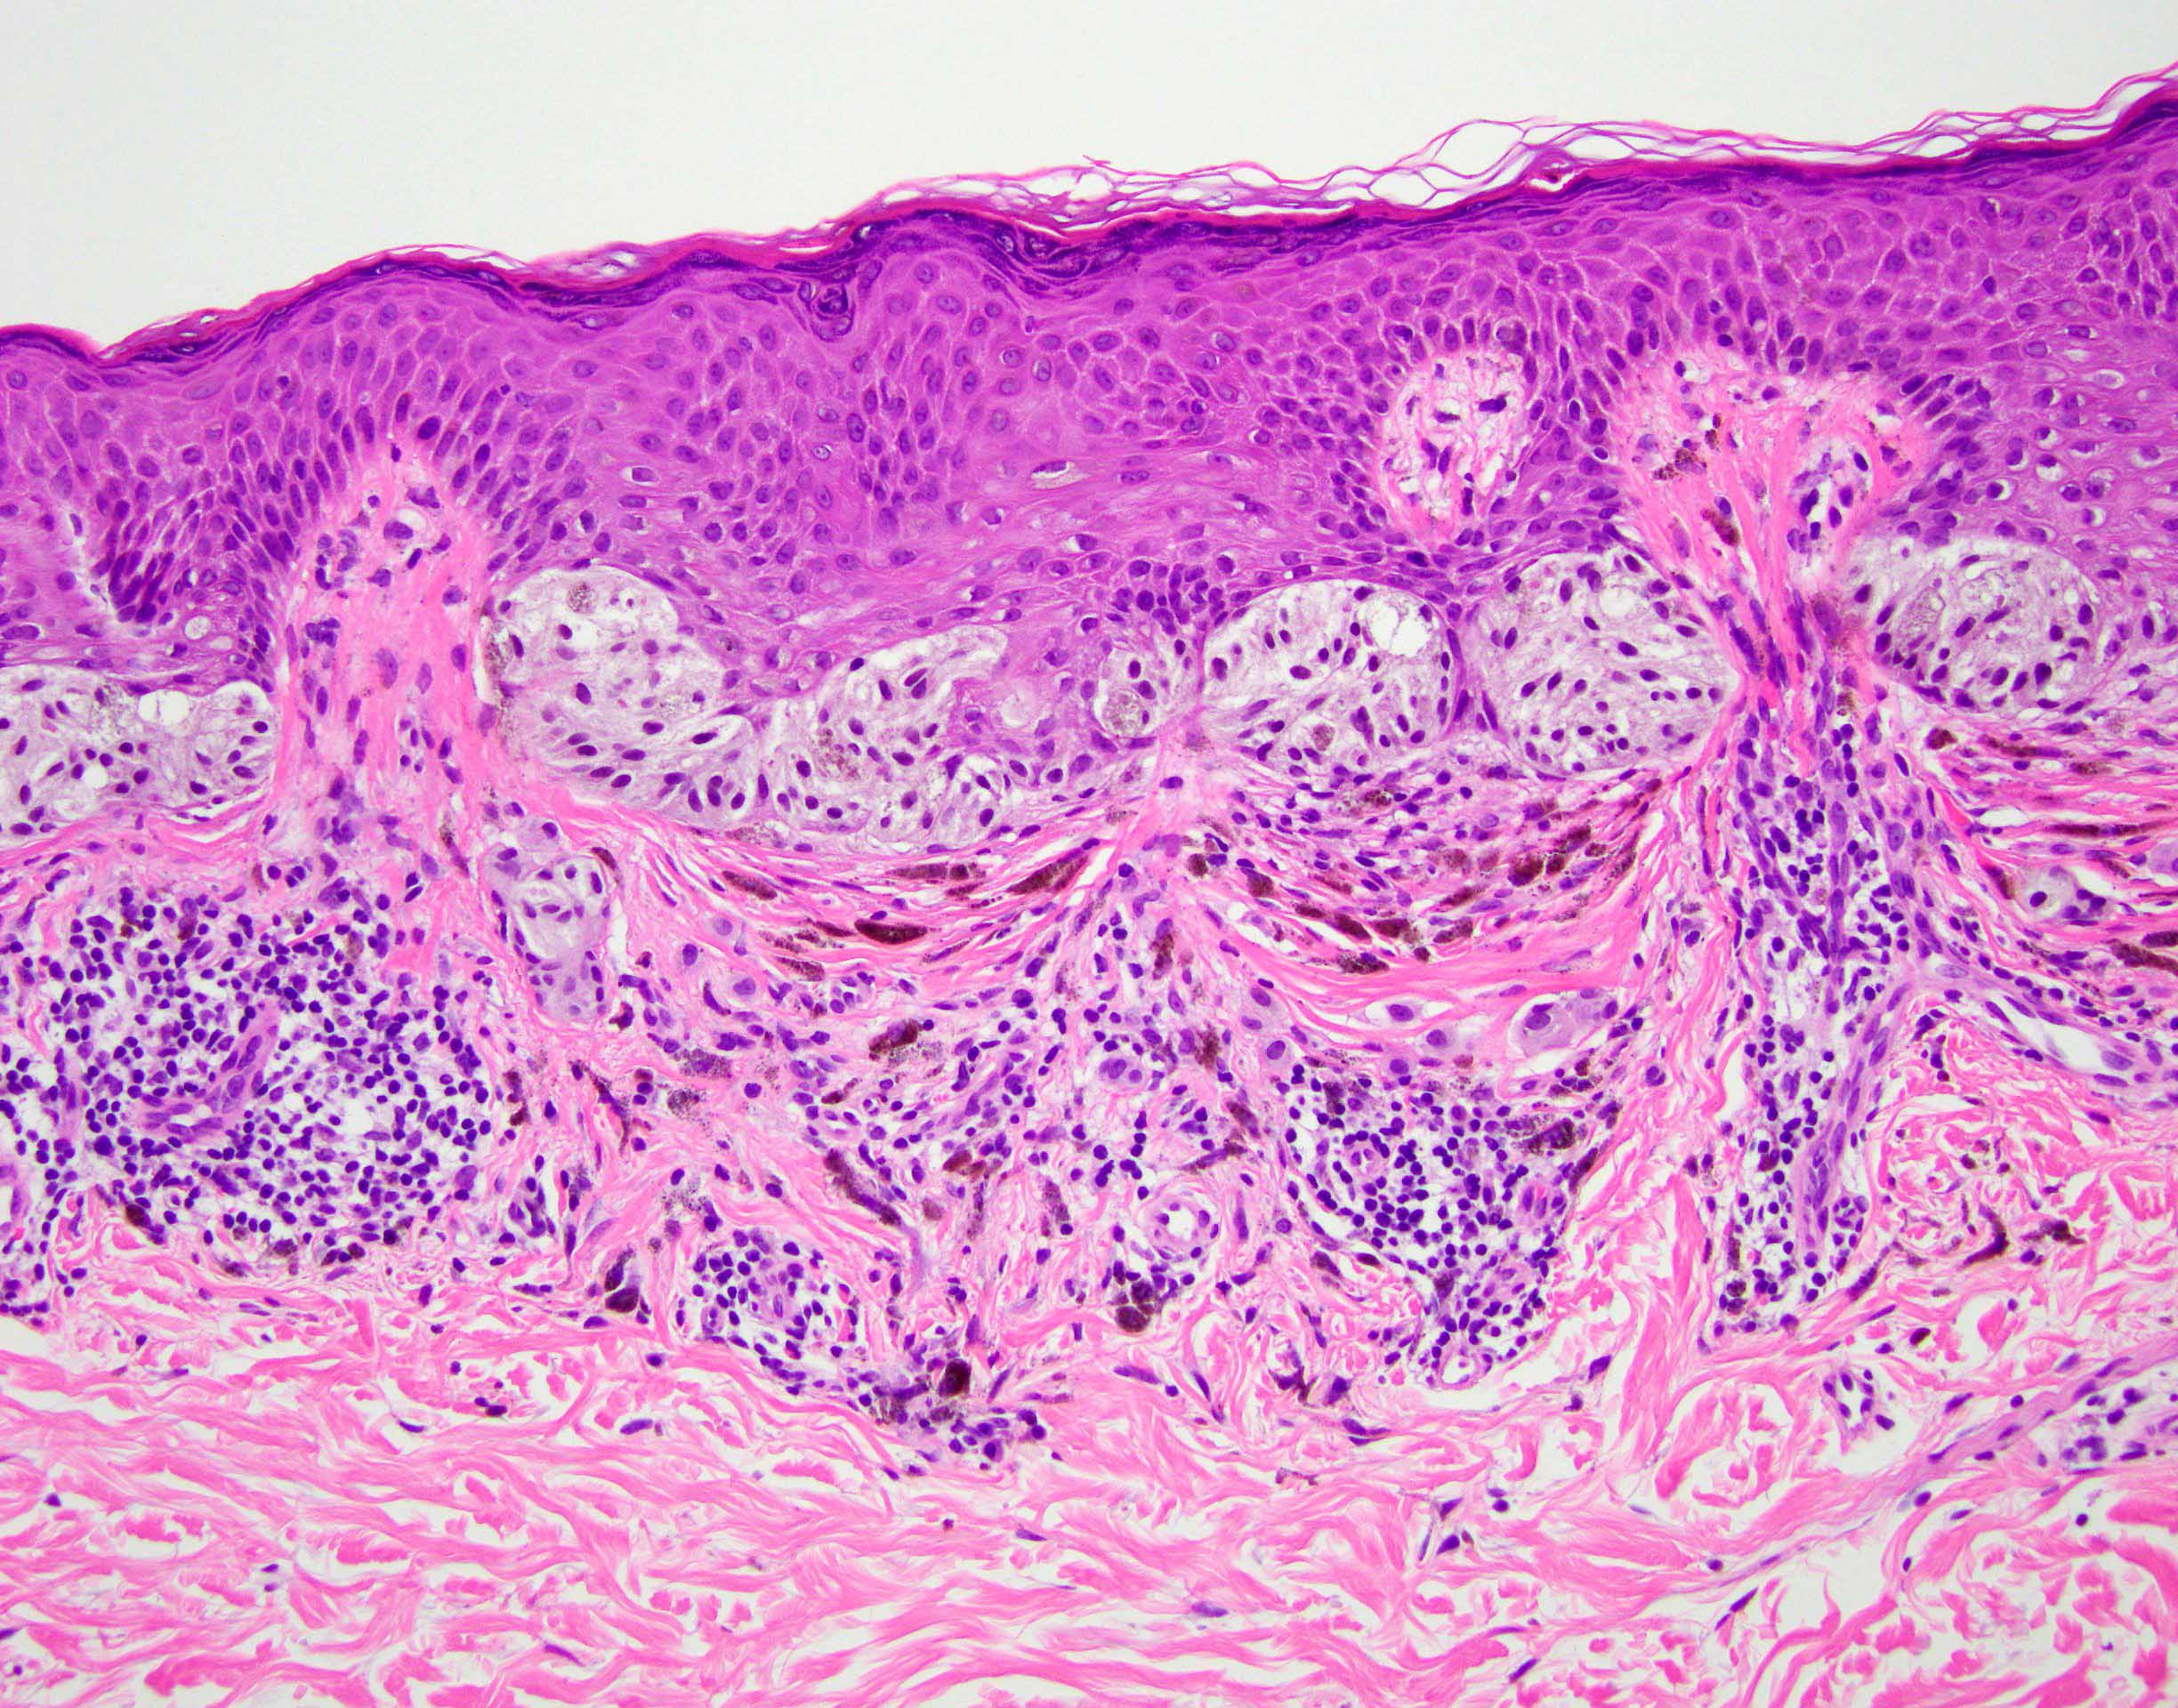 Pathology Outlines - Dysplastic nevus